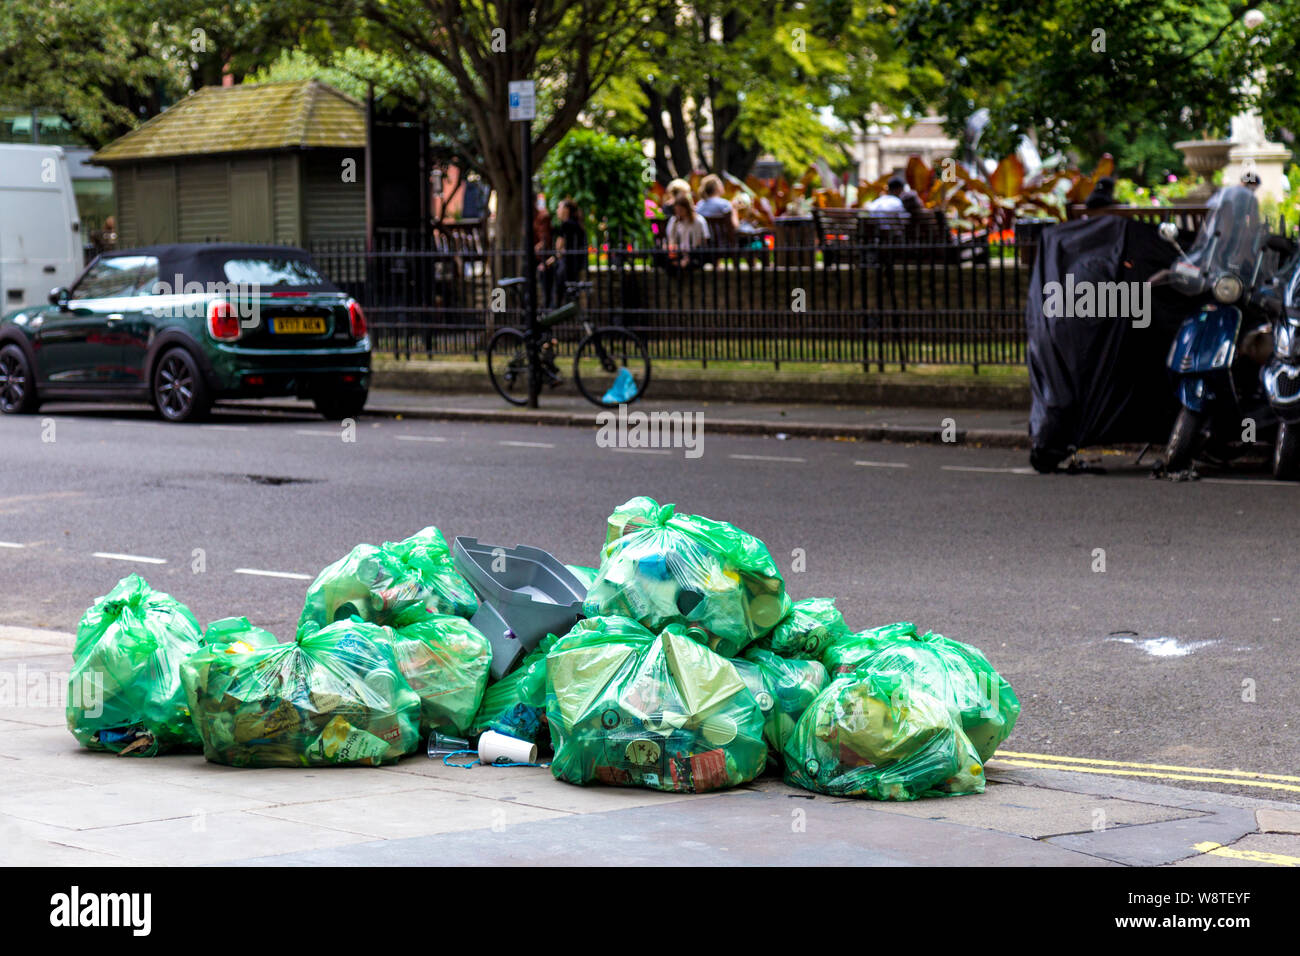 Las bolsas de basura en la calle, Londres, Reino Unido. Foto de stock